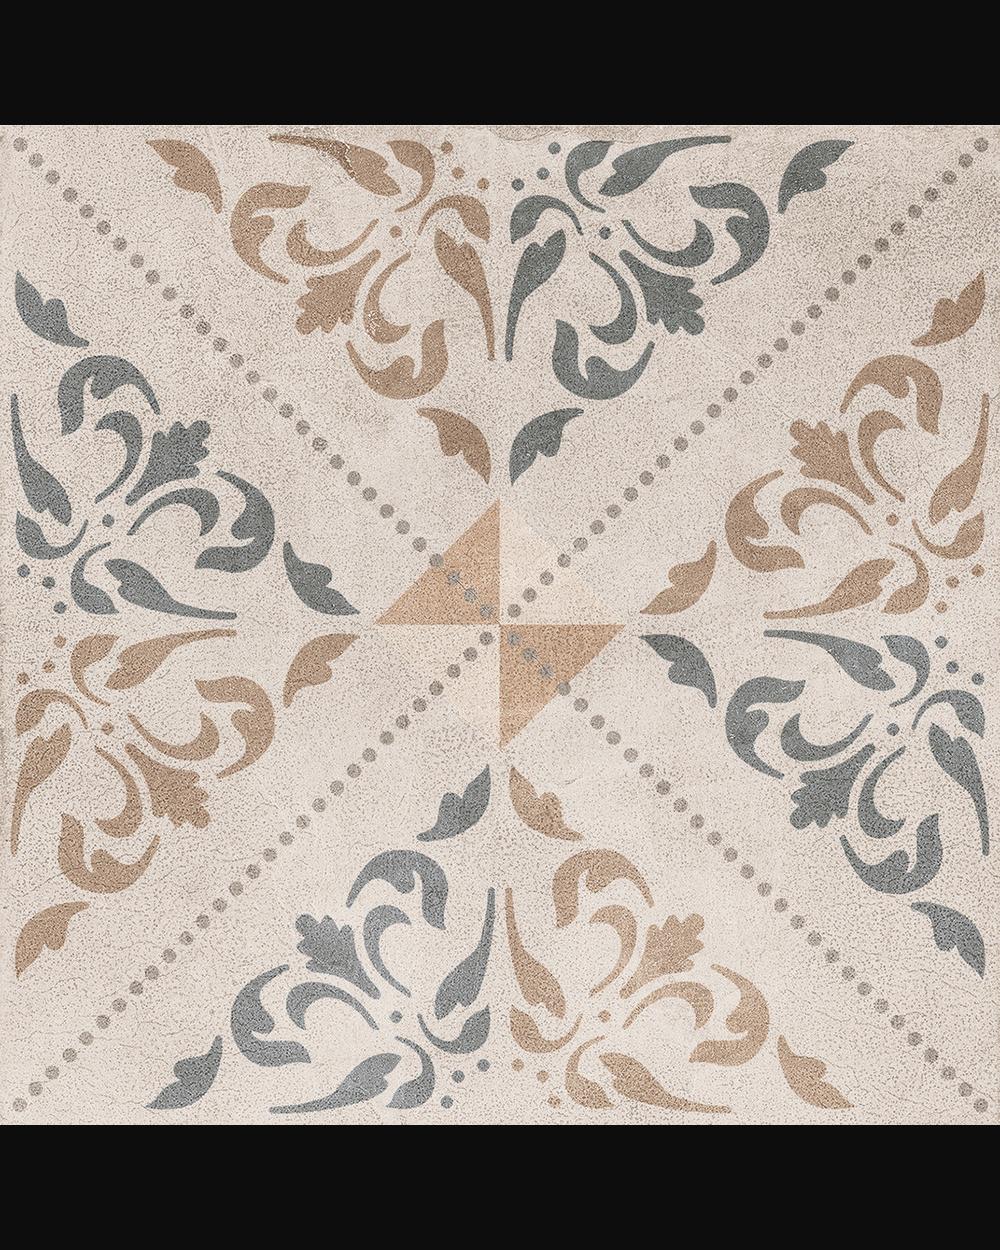 Vintage tiles with 70's style, carpet-like pattern | Tile Online Shop